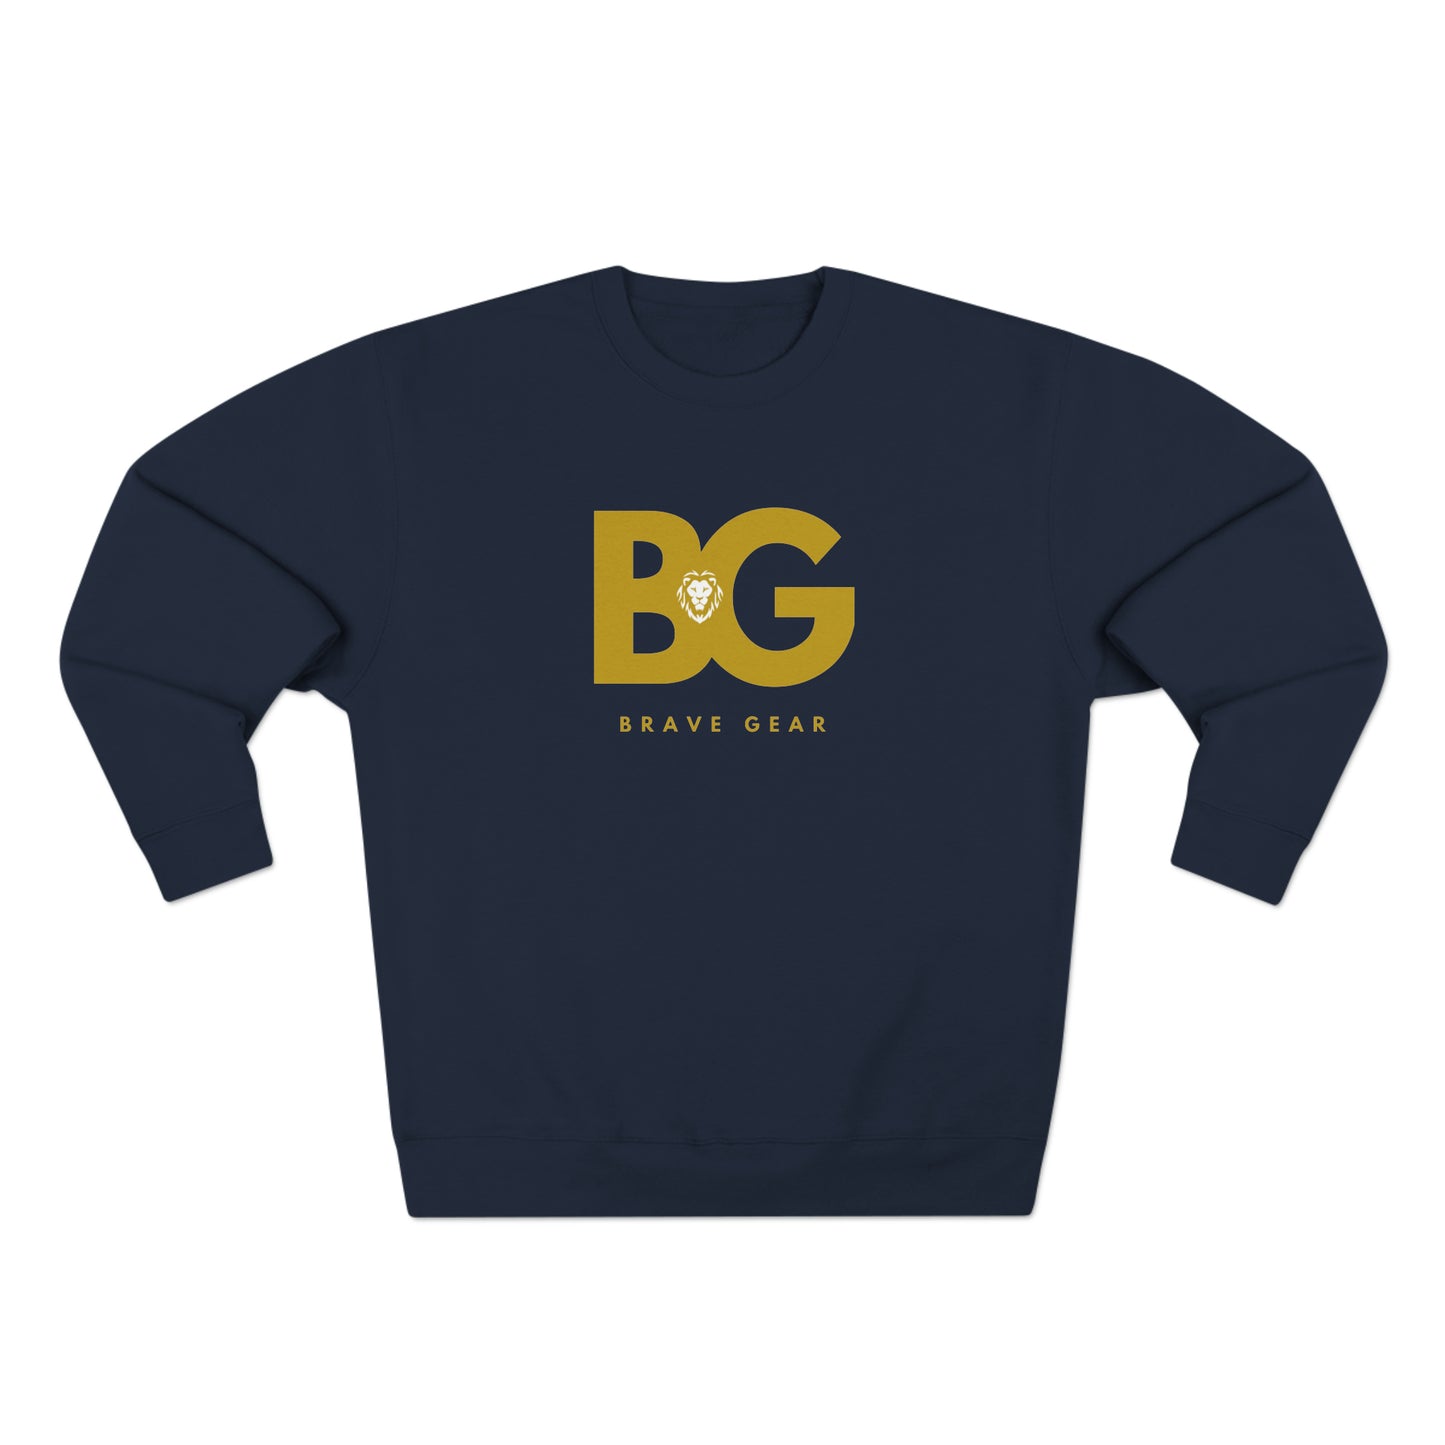 BG gold logo Premium Crewneck Sweatshirt